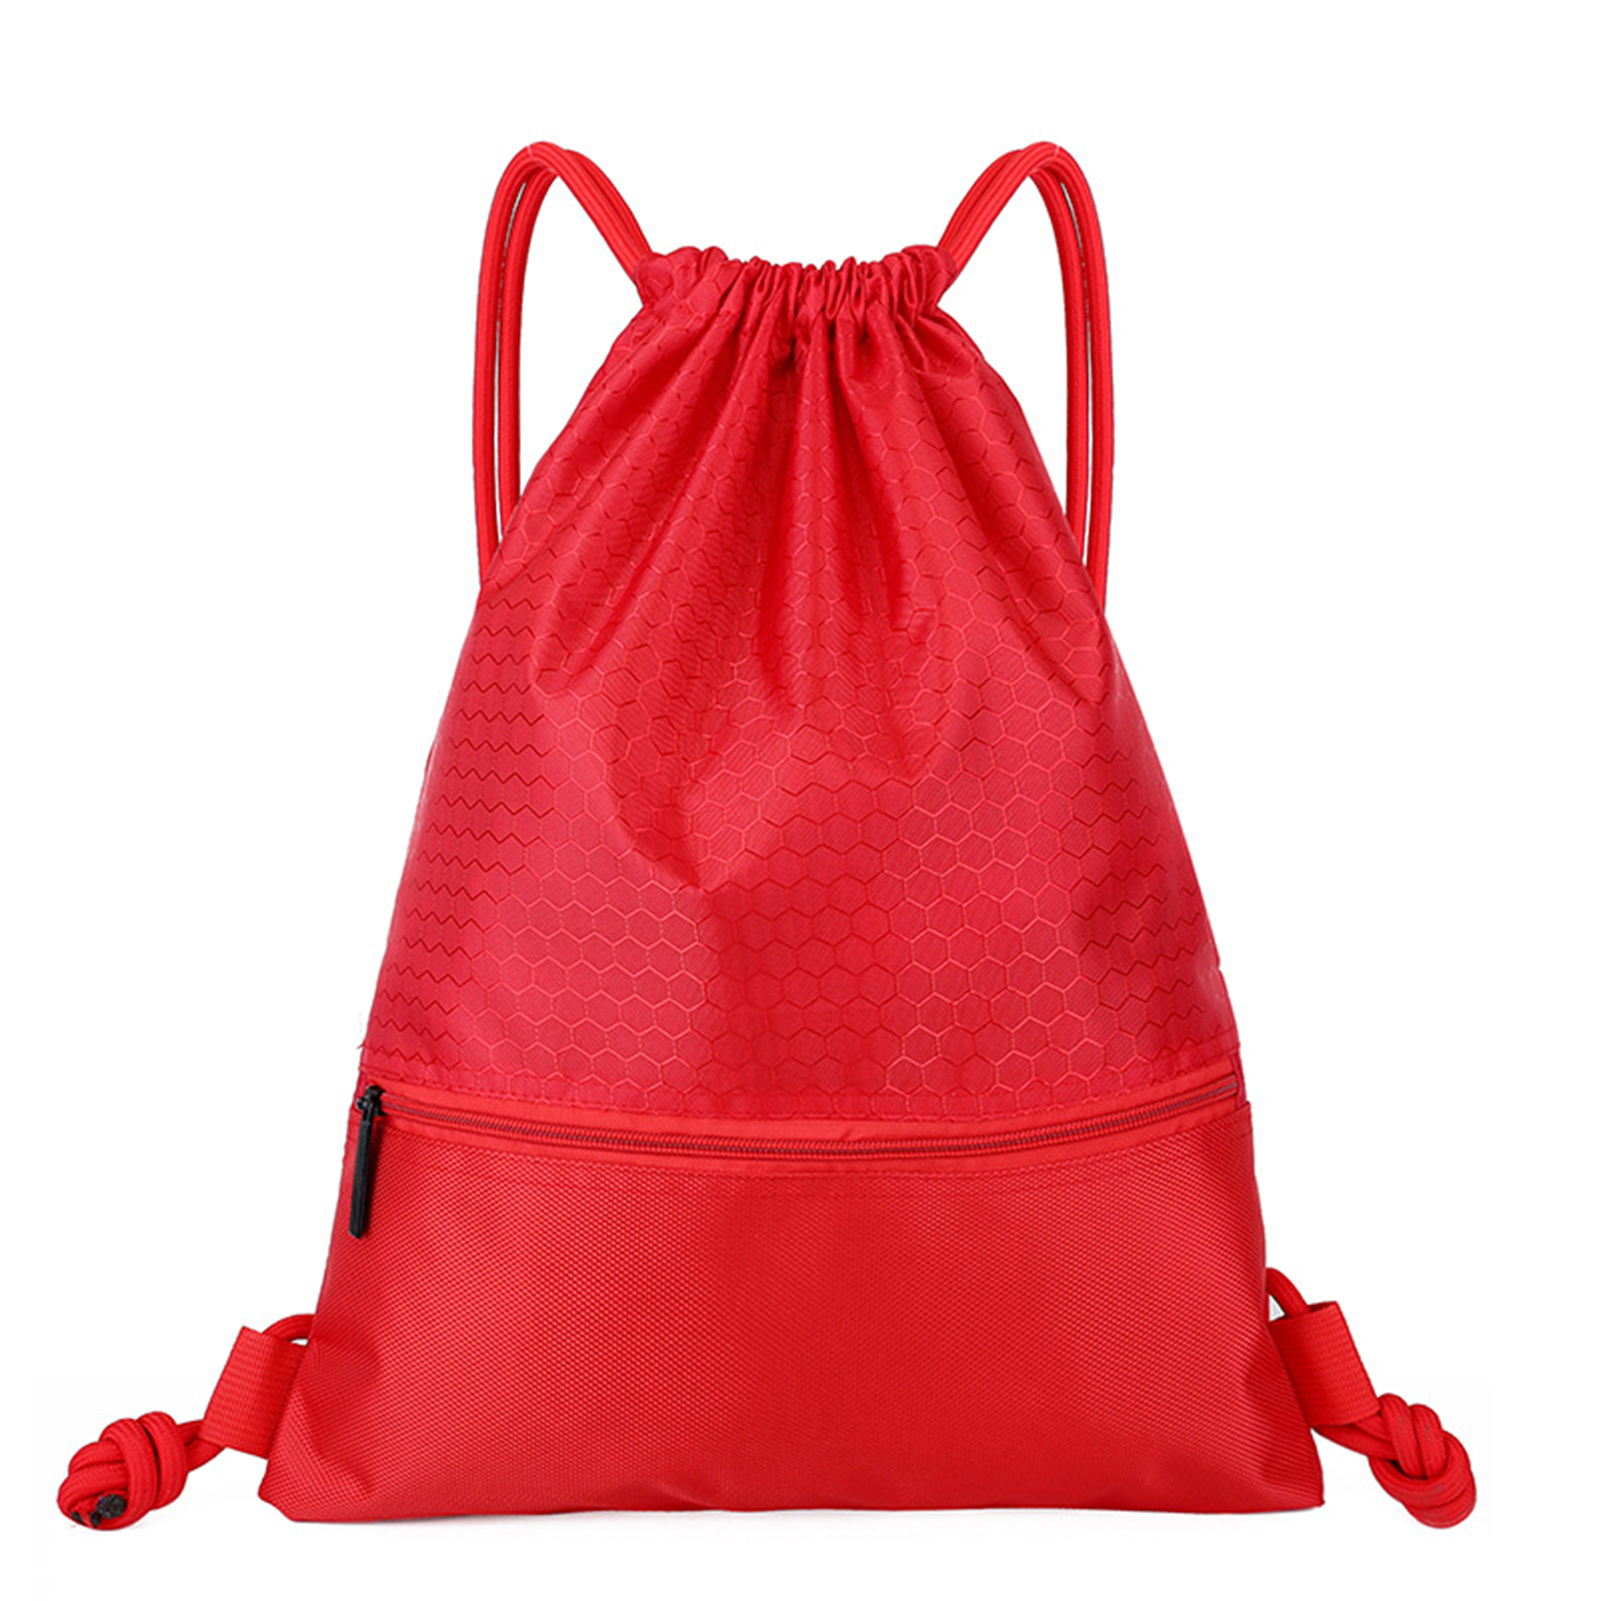 Yesbay Nylon Waterproof Zipper Drawstring Backpack Outdoor Sport Fitness Storage Bag,Red - image 2 of 7